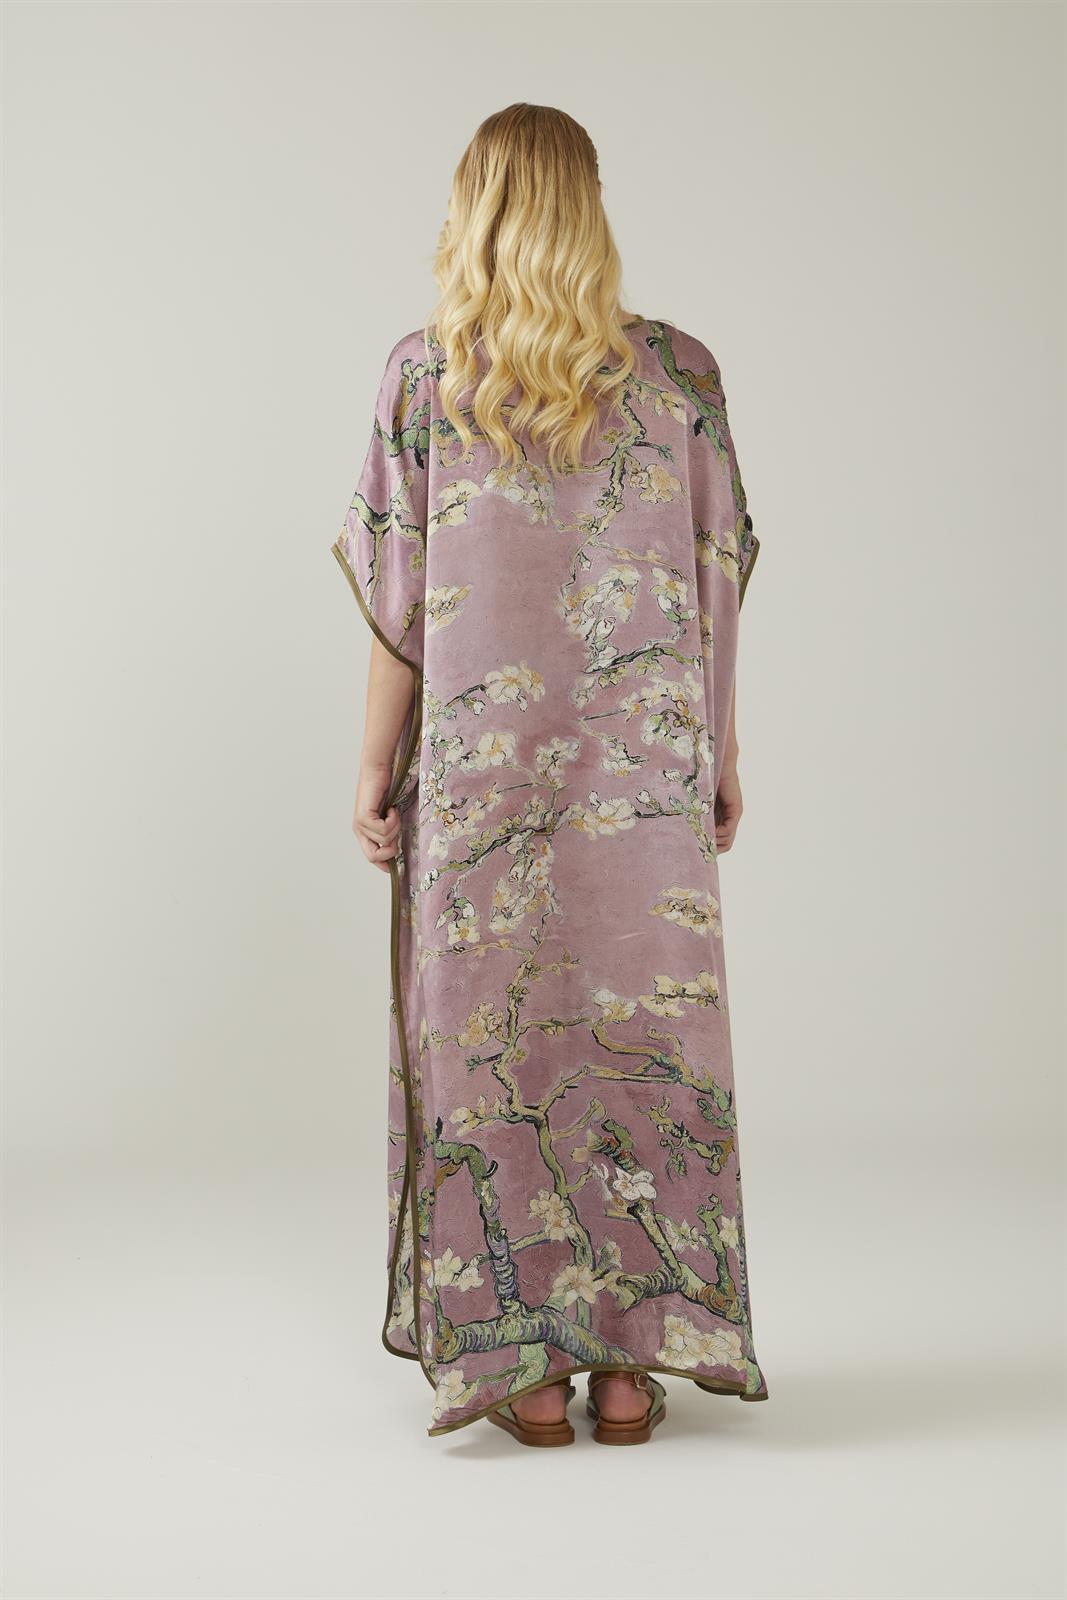 Ikigai The City Pink Van Gogh Almond Blossoms Patterned Satin Silk Dress / Kaftan